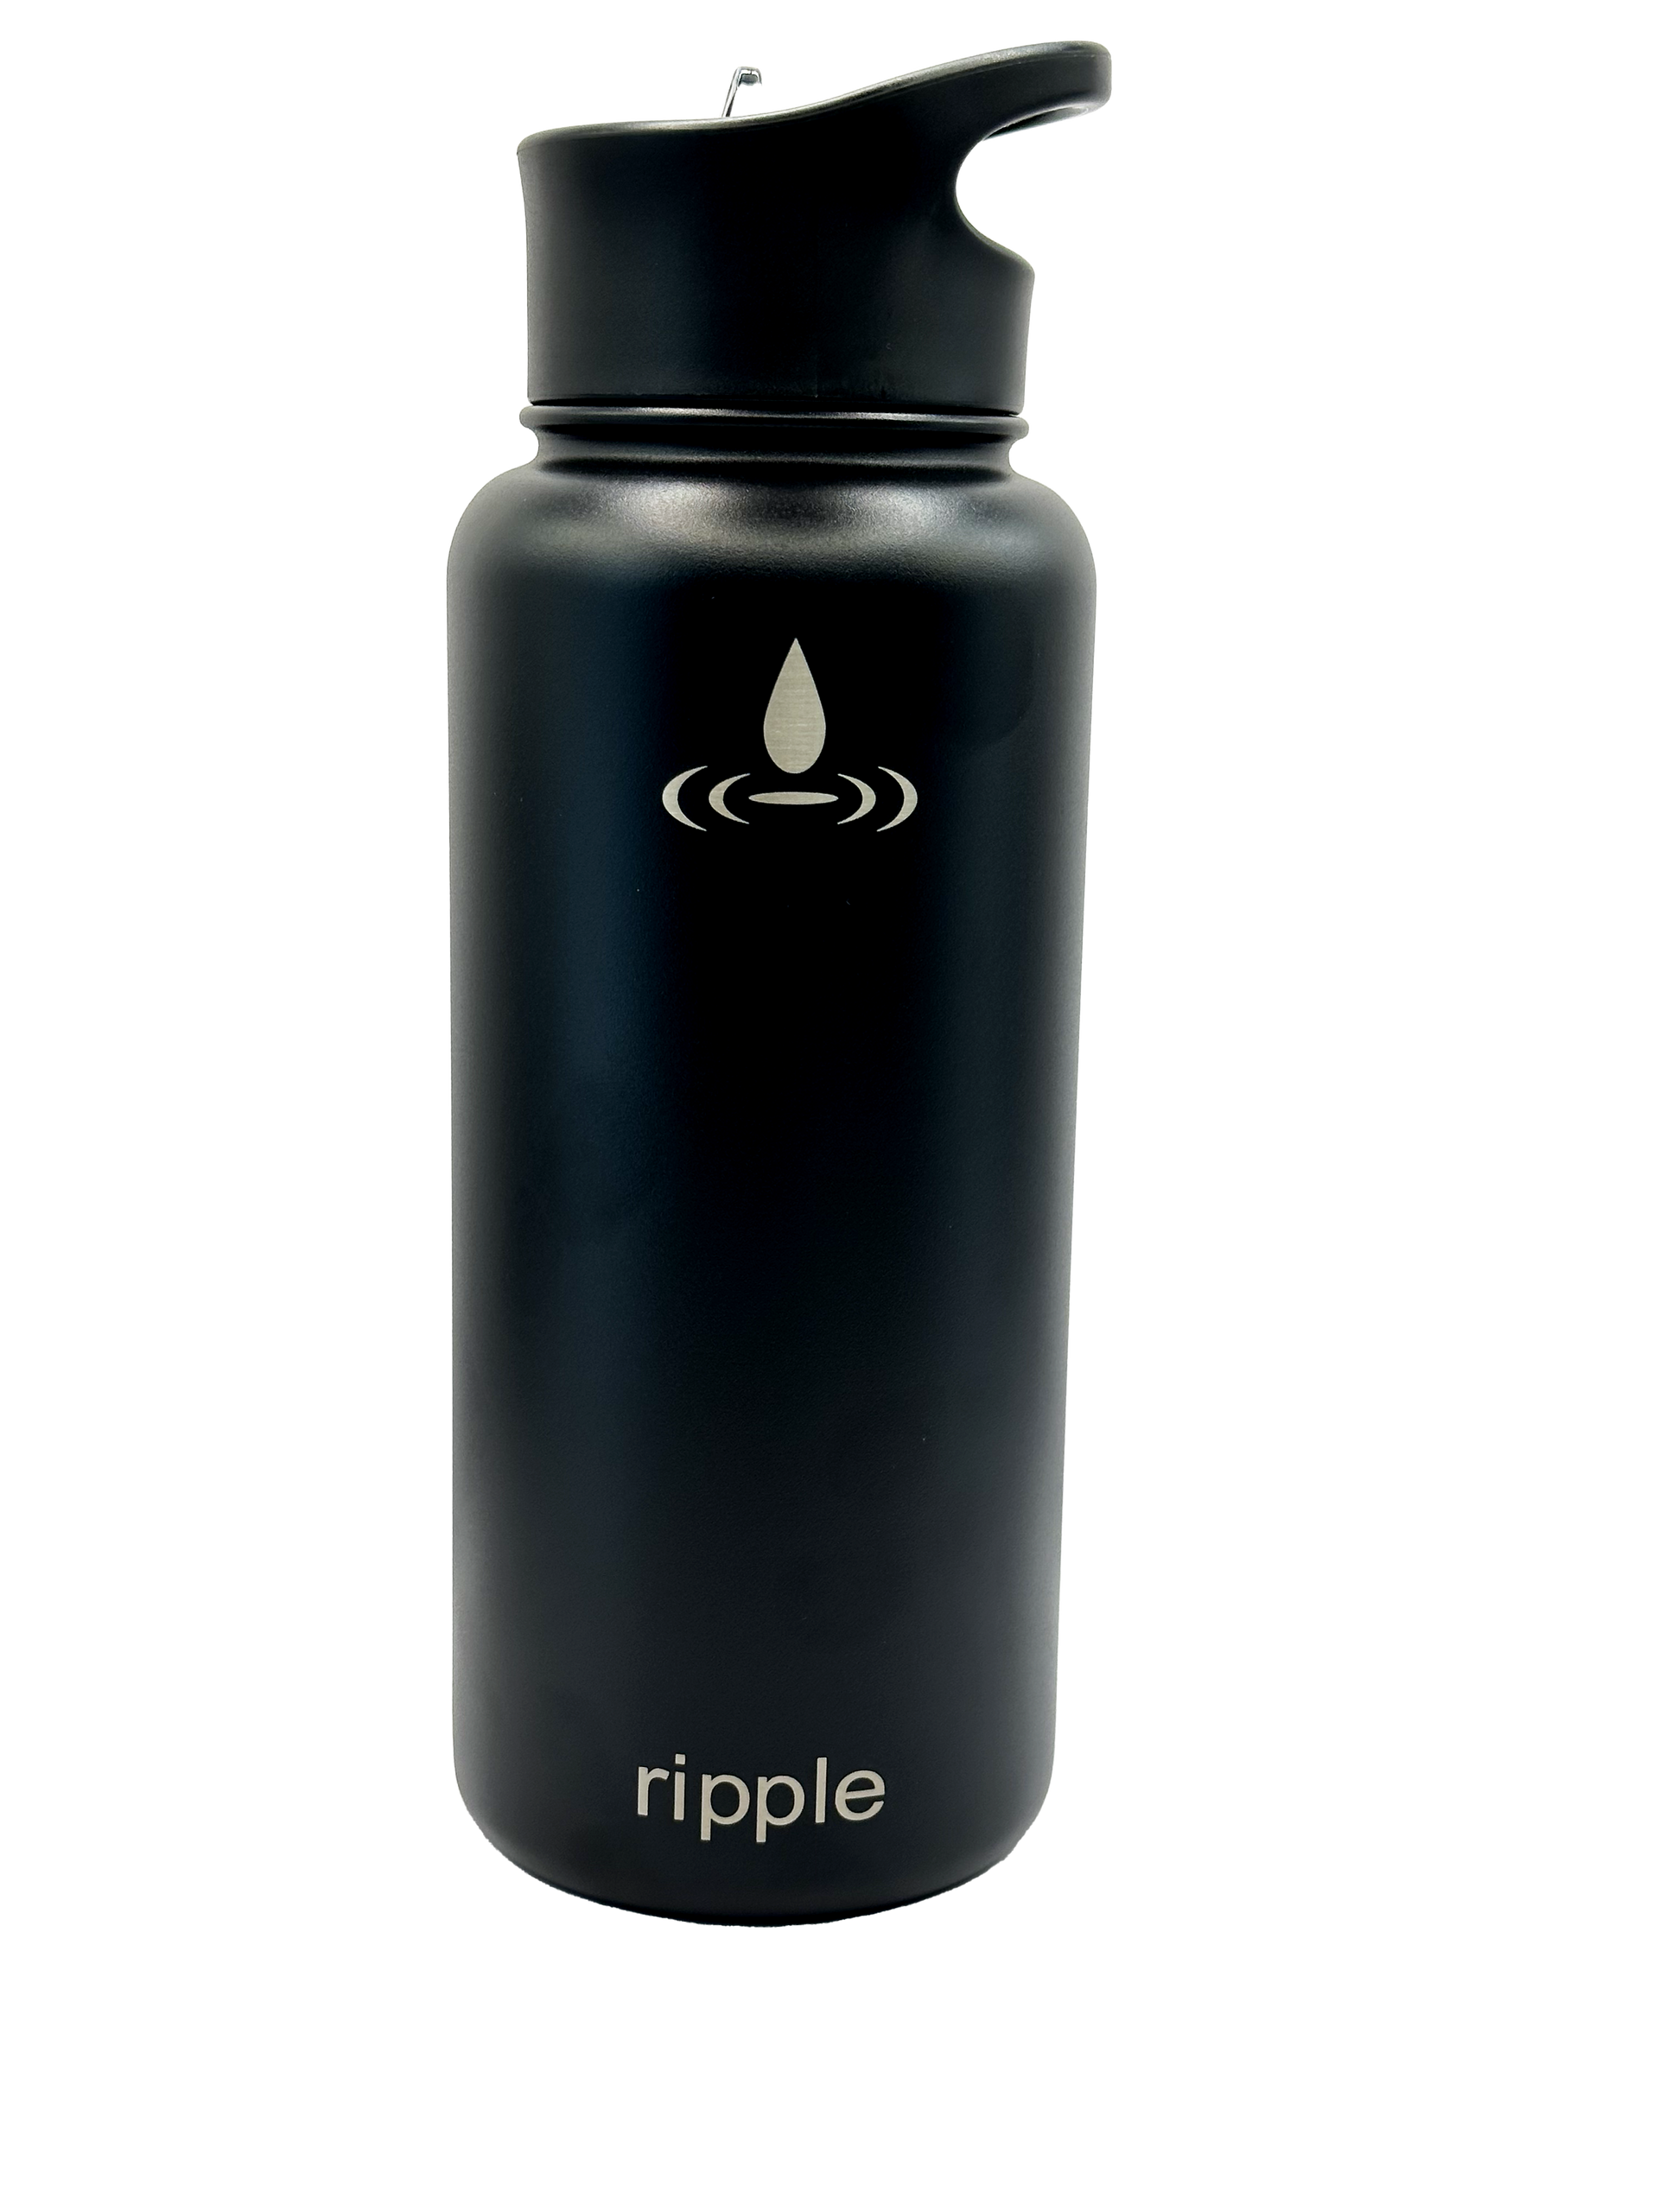 32 Oz. Lavender Ripple Bottle – We Are The Ripple